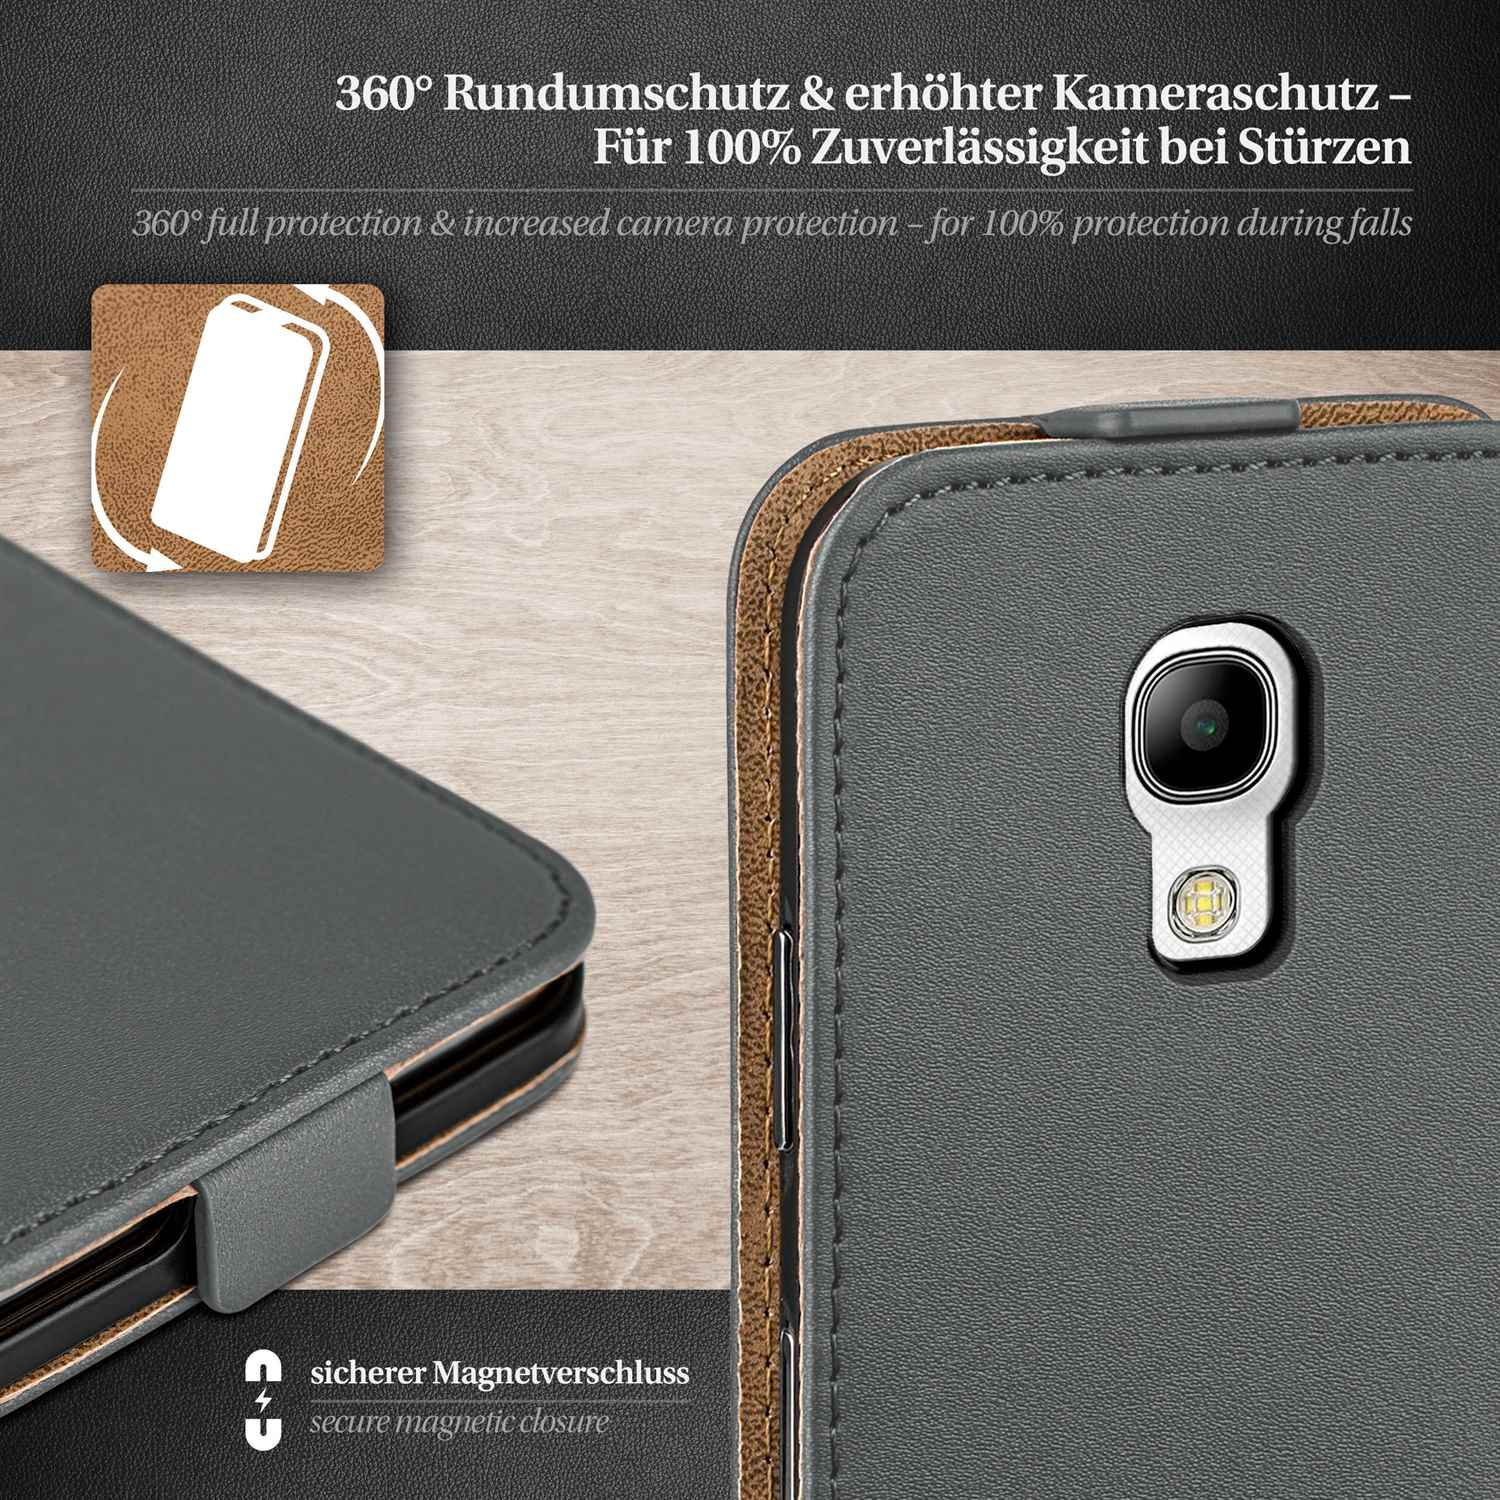 Cover, Flip Samsung, MOEX Galaxy Case, S4, Flip Anthracite-Gray